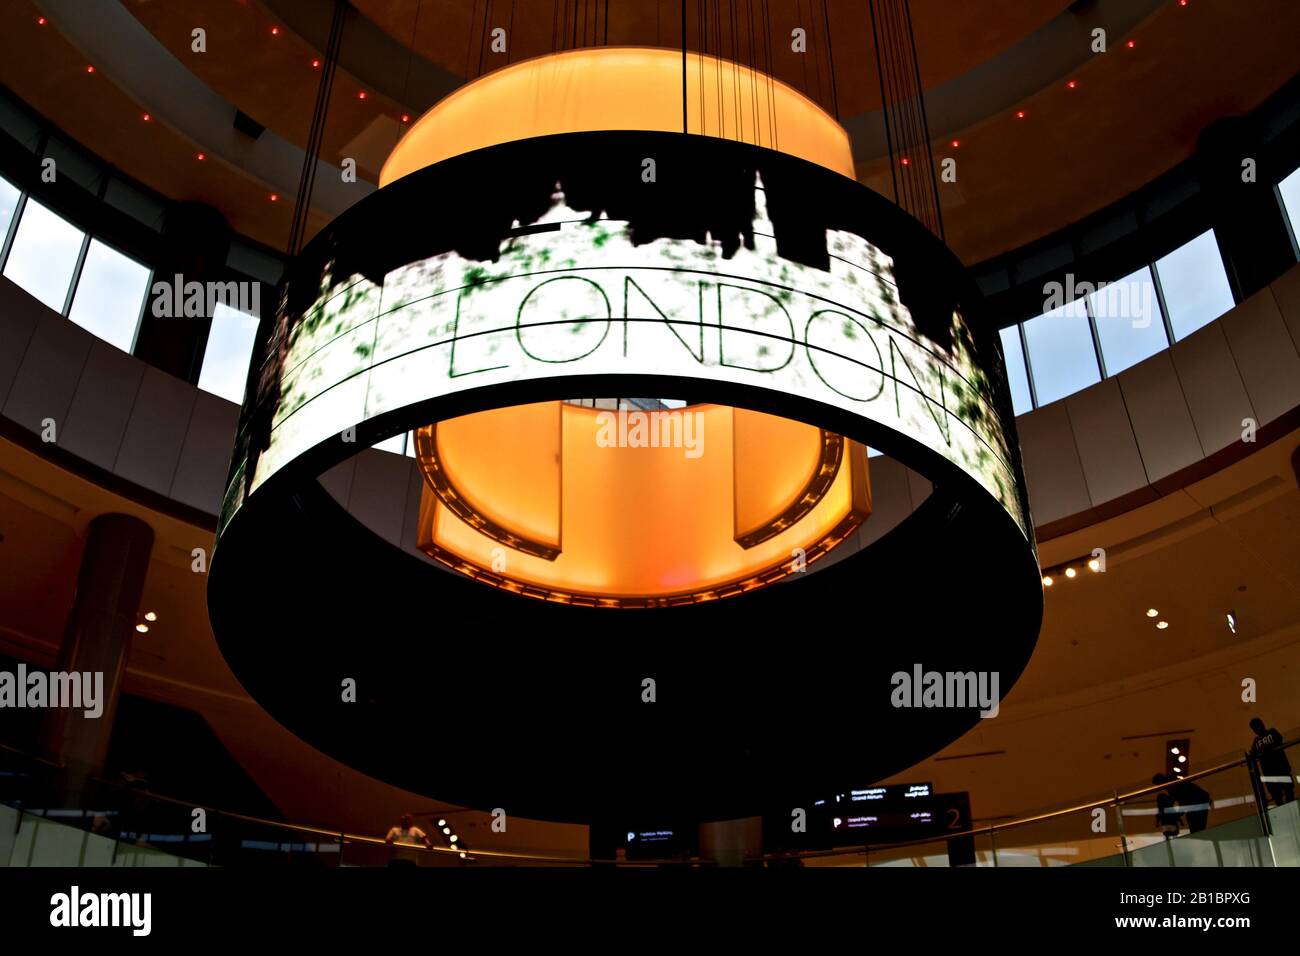 Dubai-Led circular chandelier inside Dubai mall showing London Stock Photo